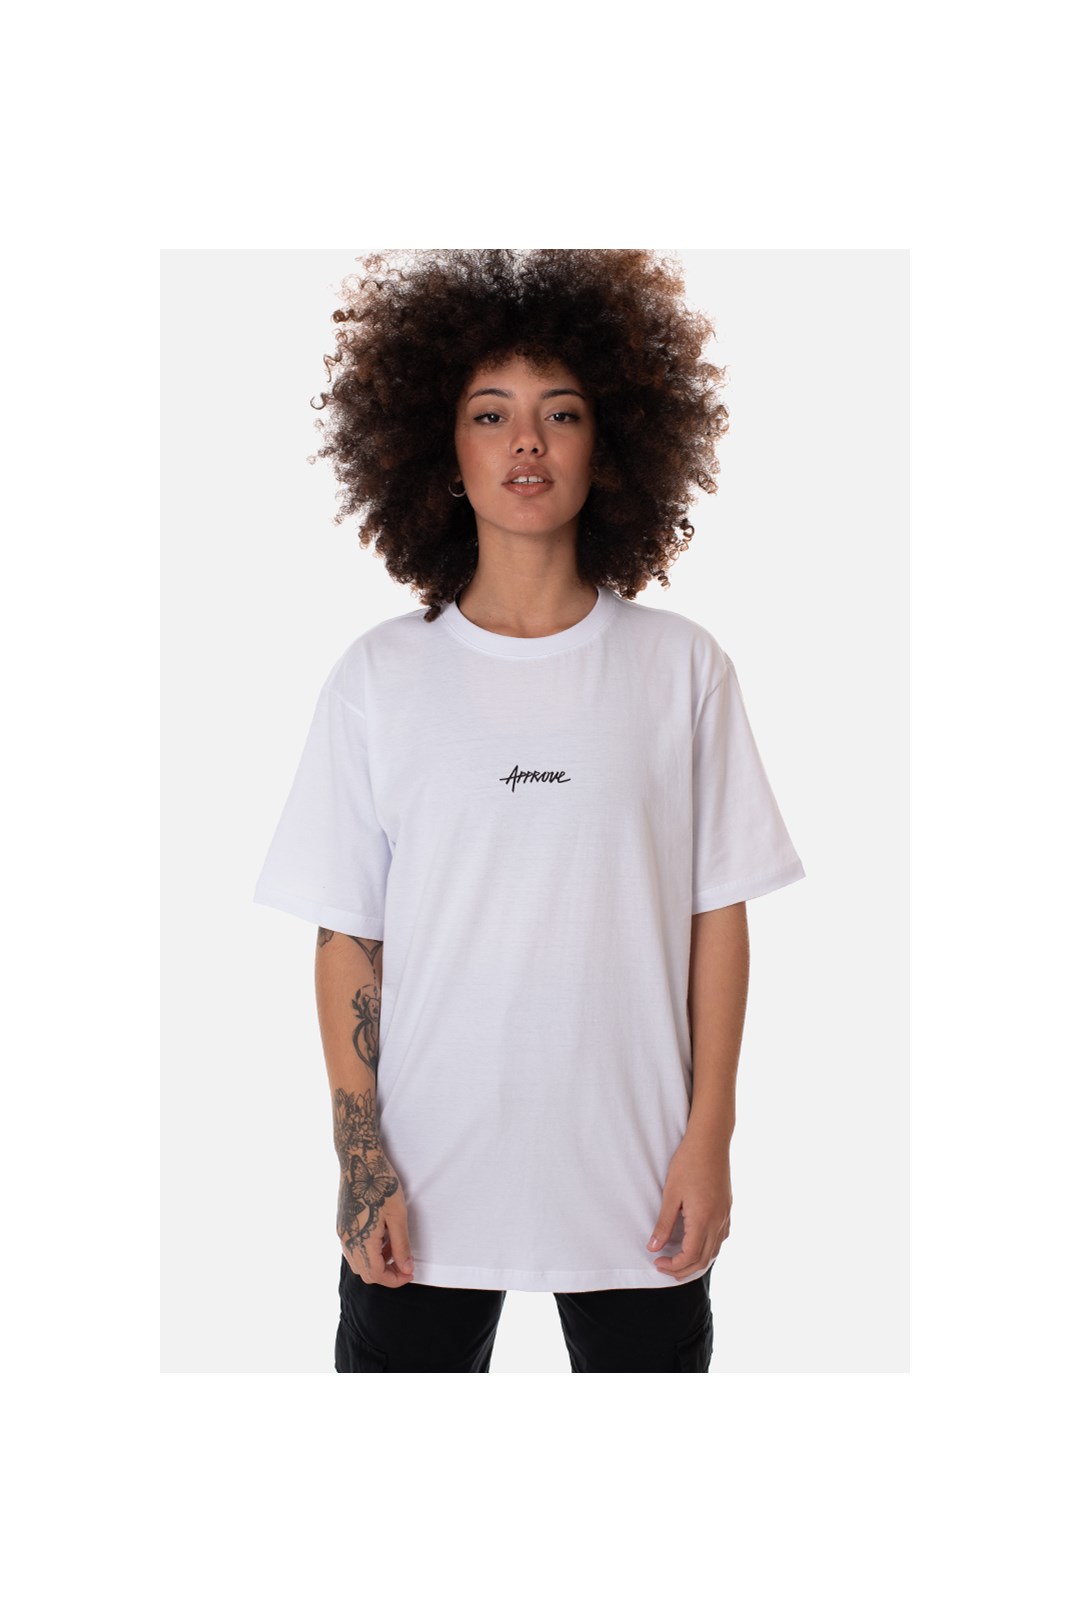 Camiseta Regular Approve PB Branca